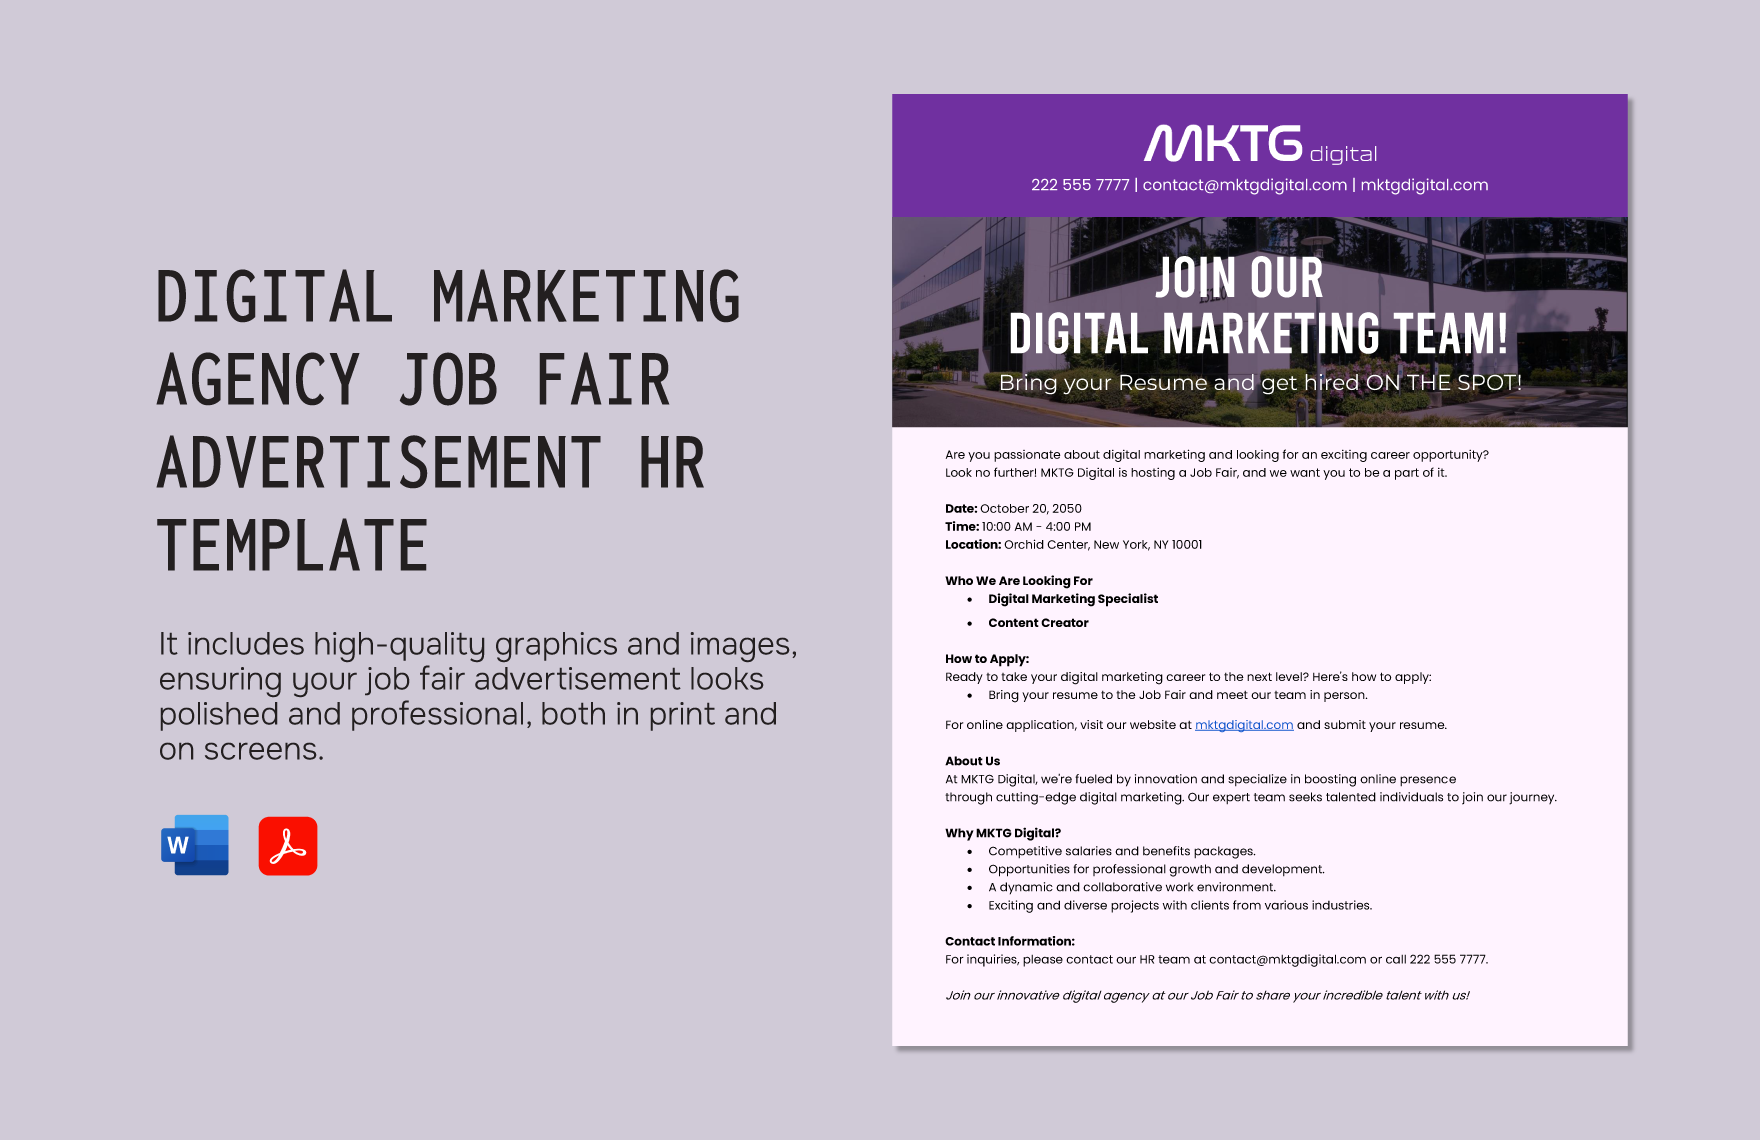 Digital Marketing Agency Job Fair Advertisement HR Template